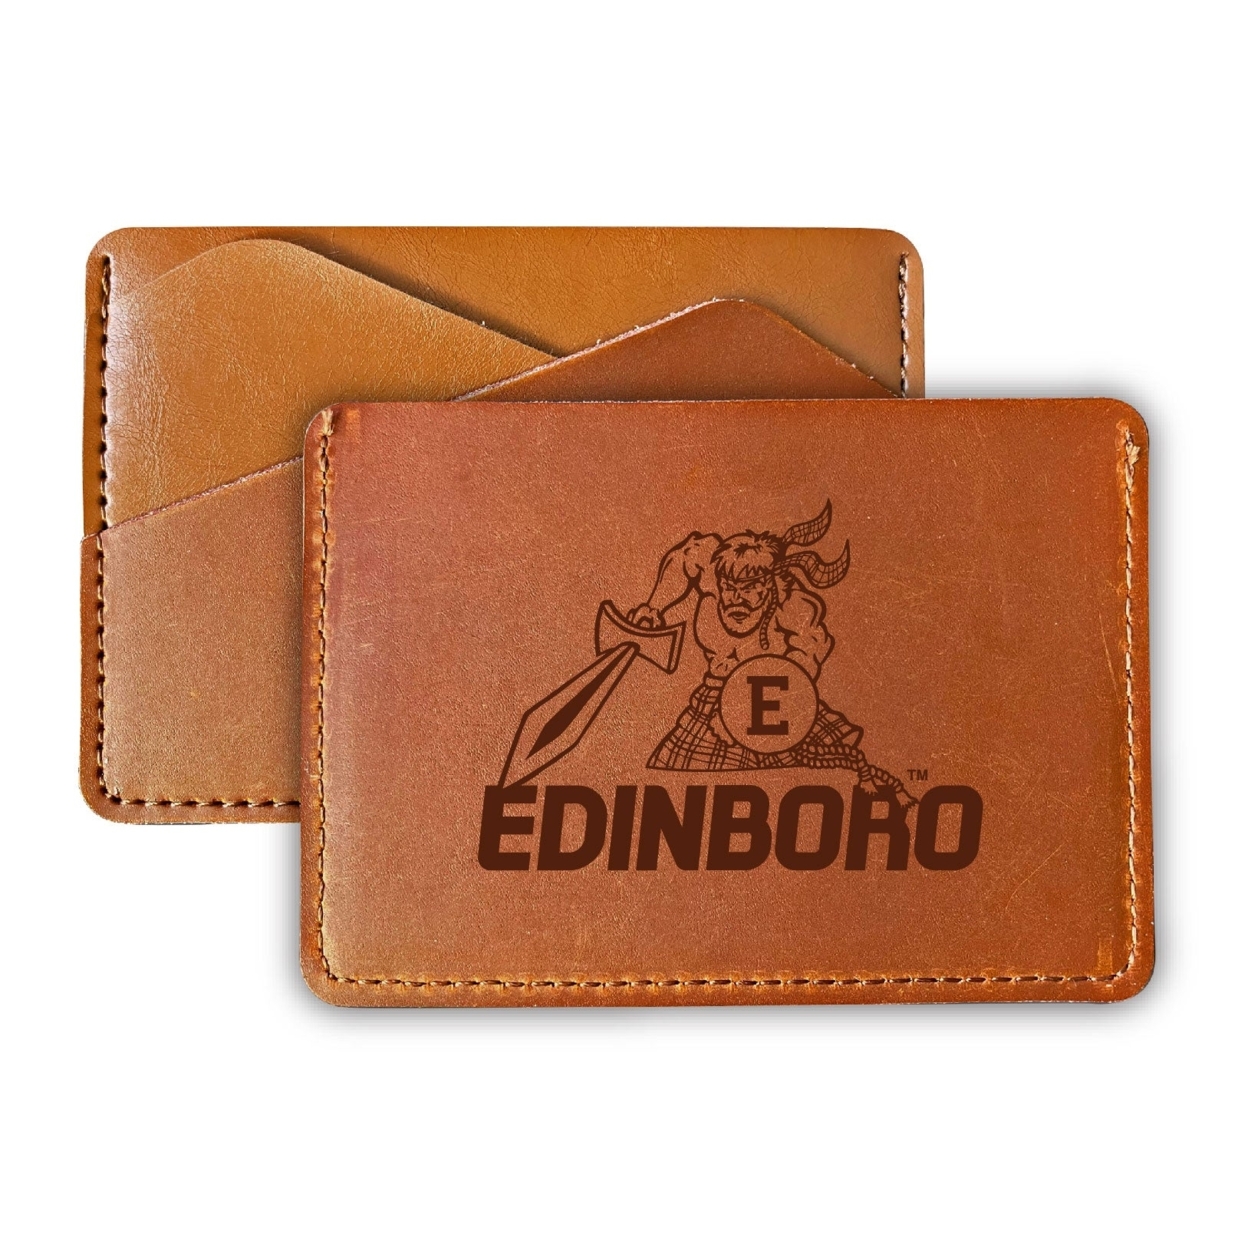 Edinboro University College Leather Card Holder Wallet